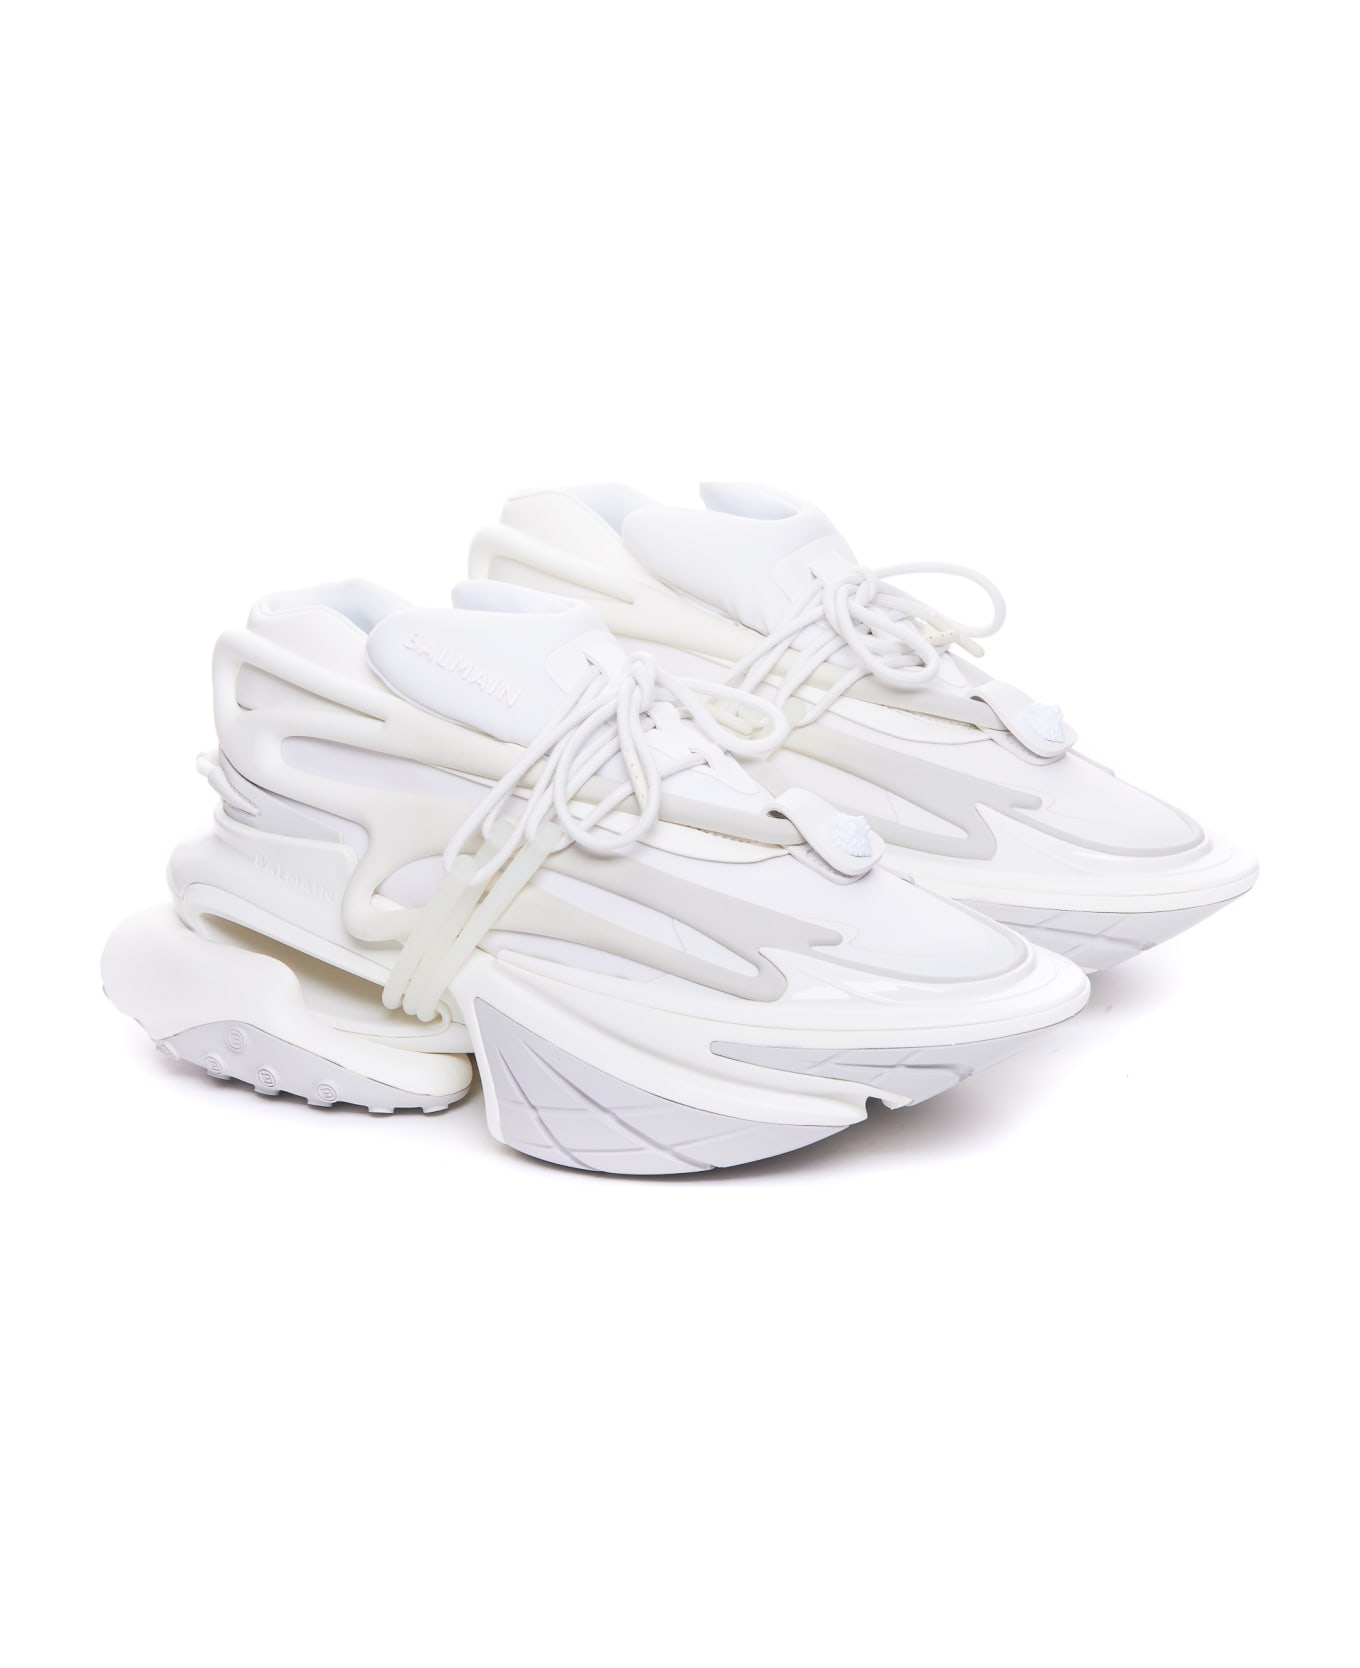 Balmain Unicorn Sneakers - White